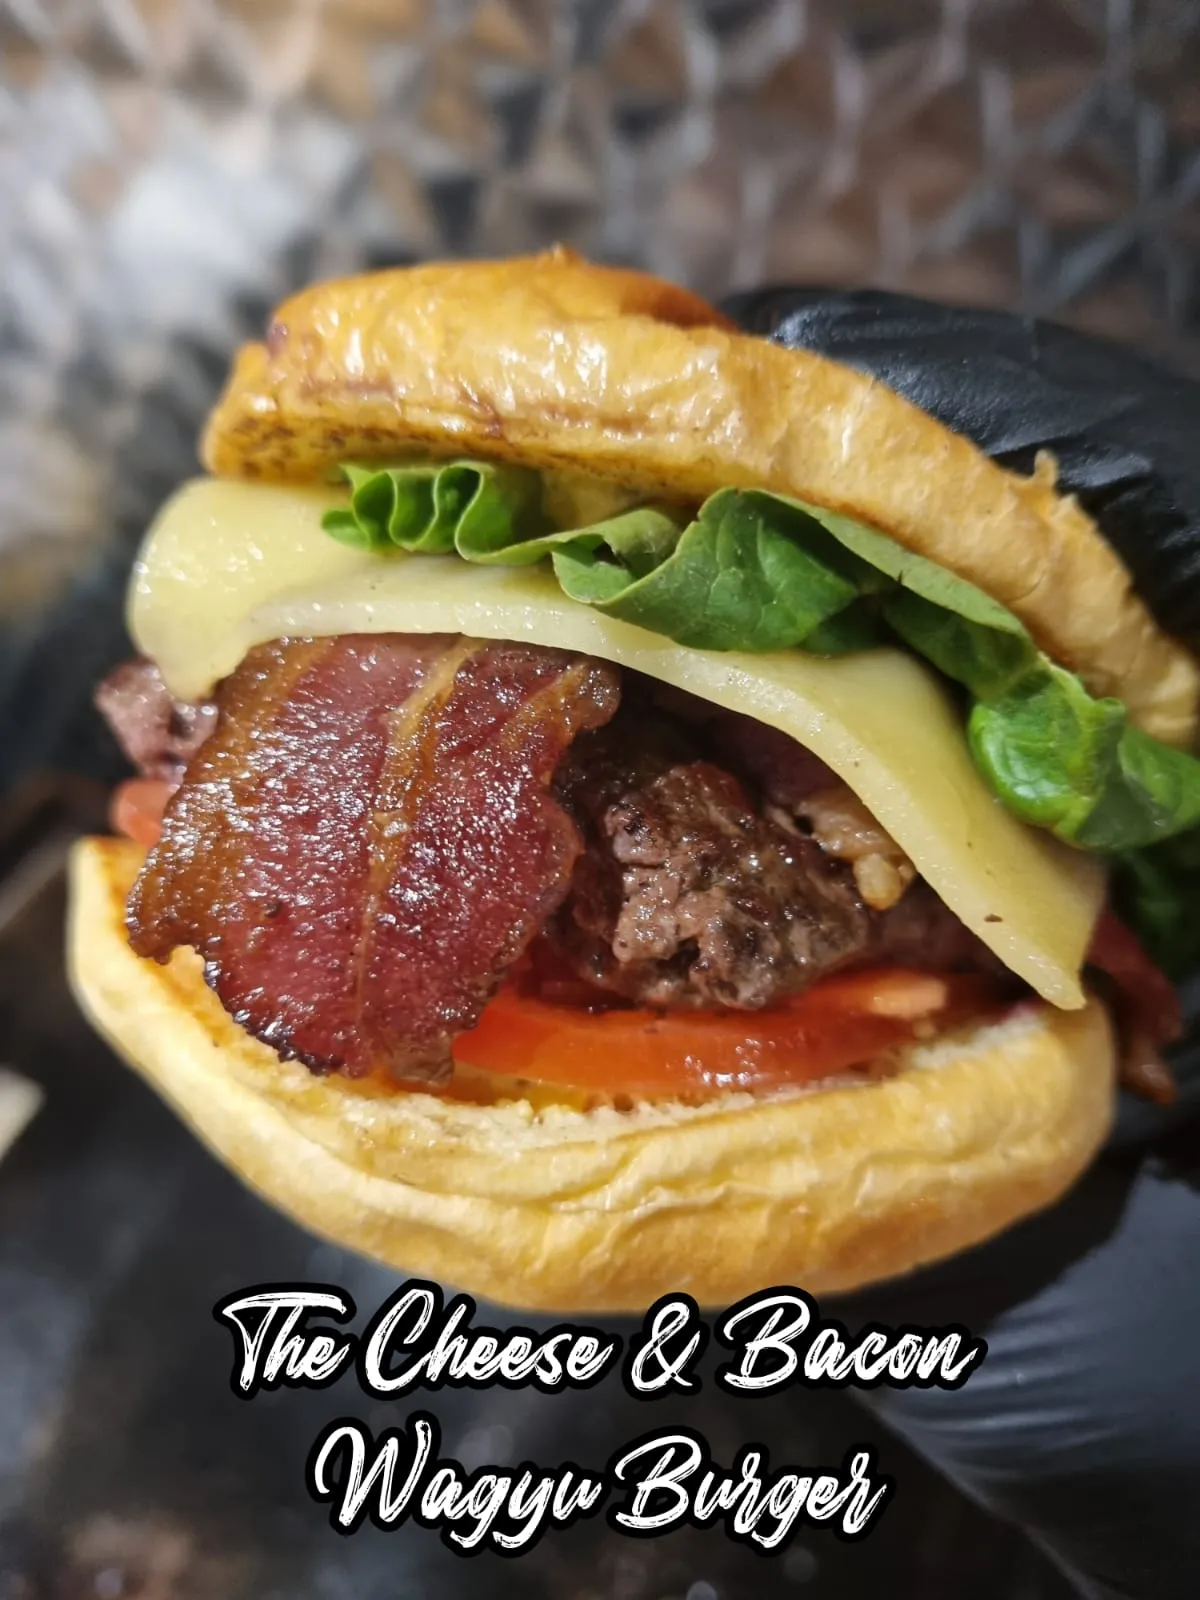 The Cheese & Bacon Wagyu Burger